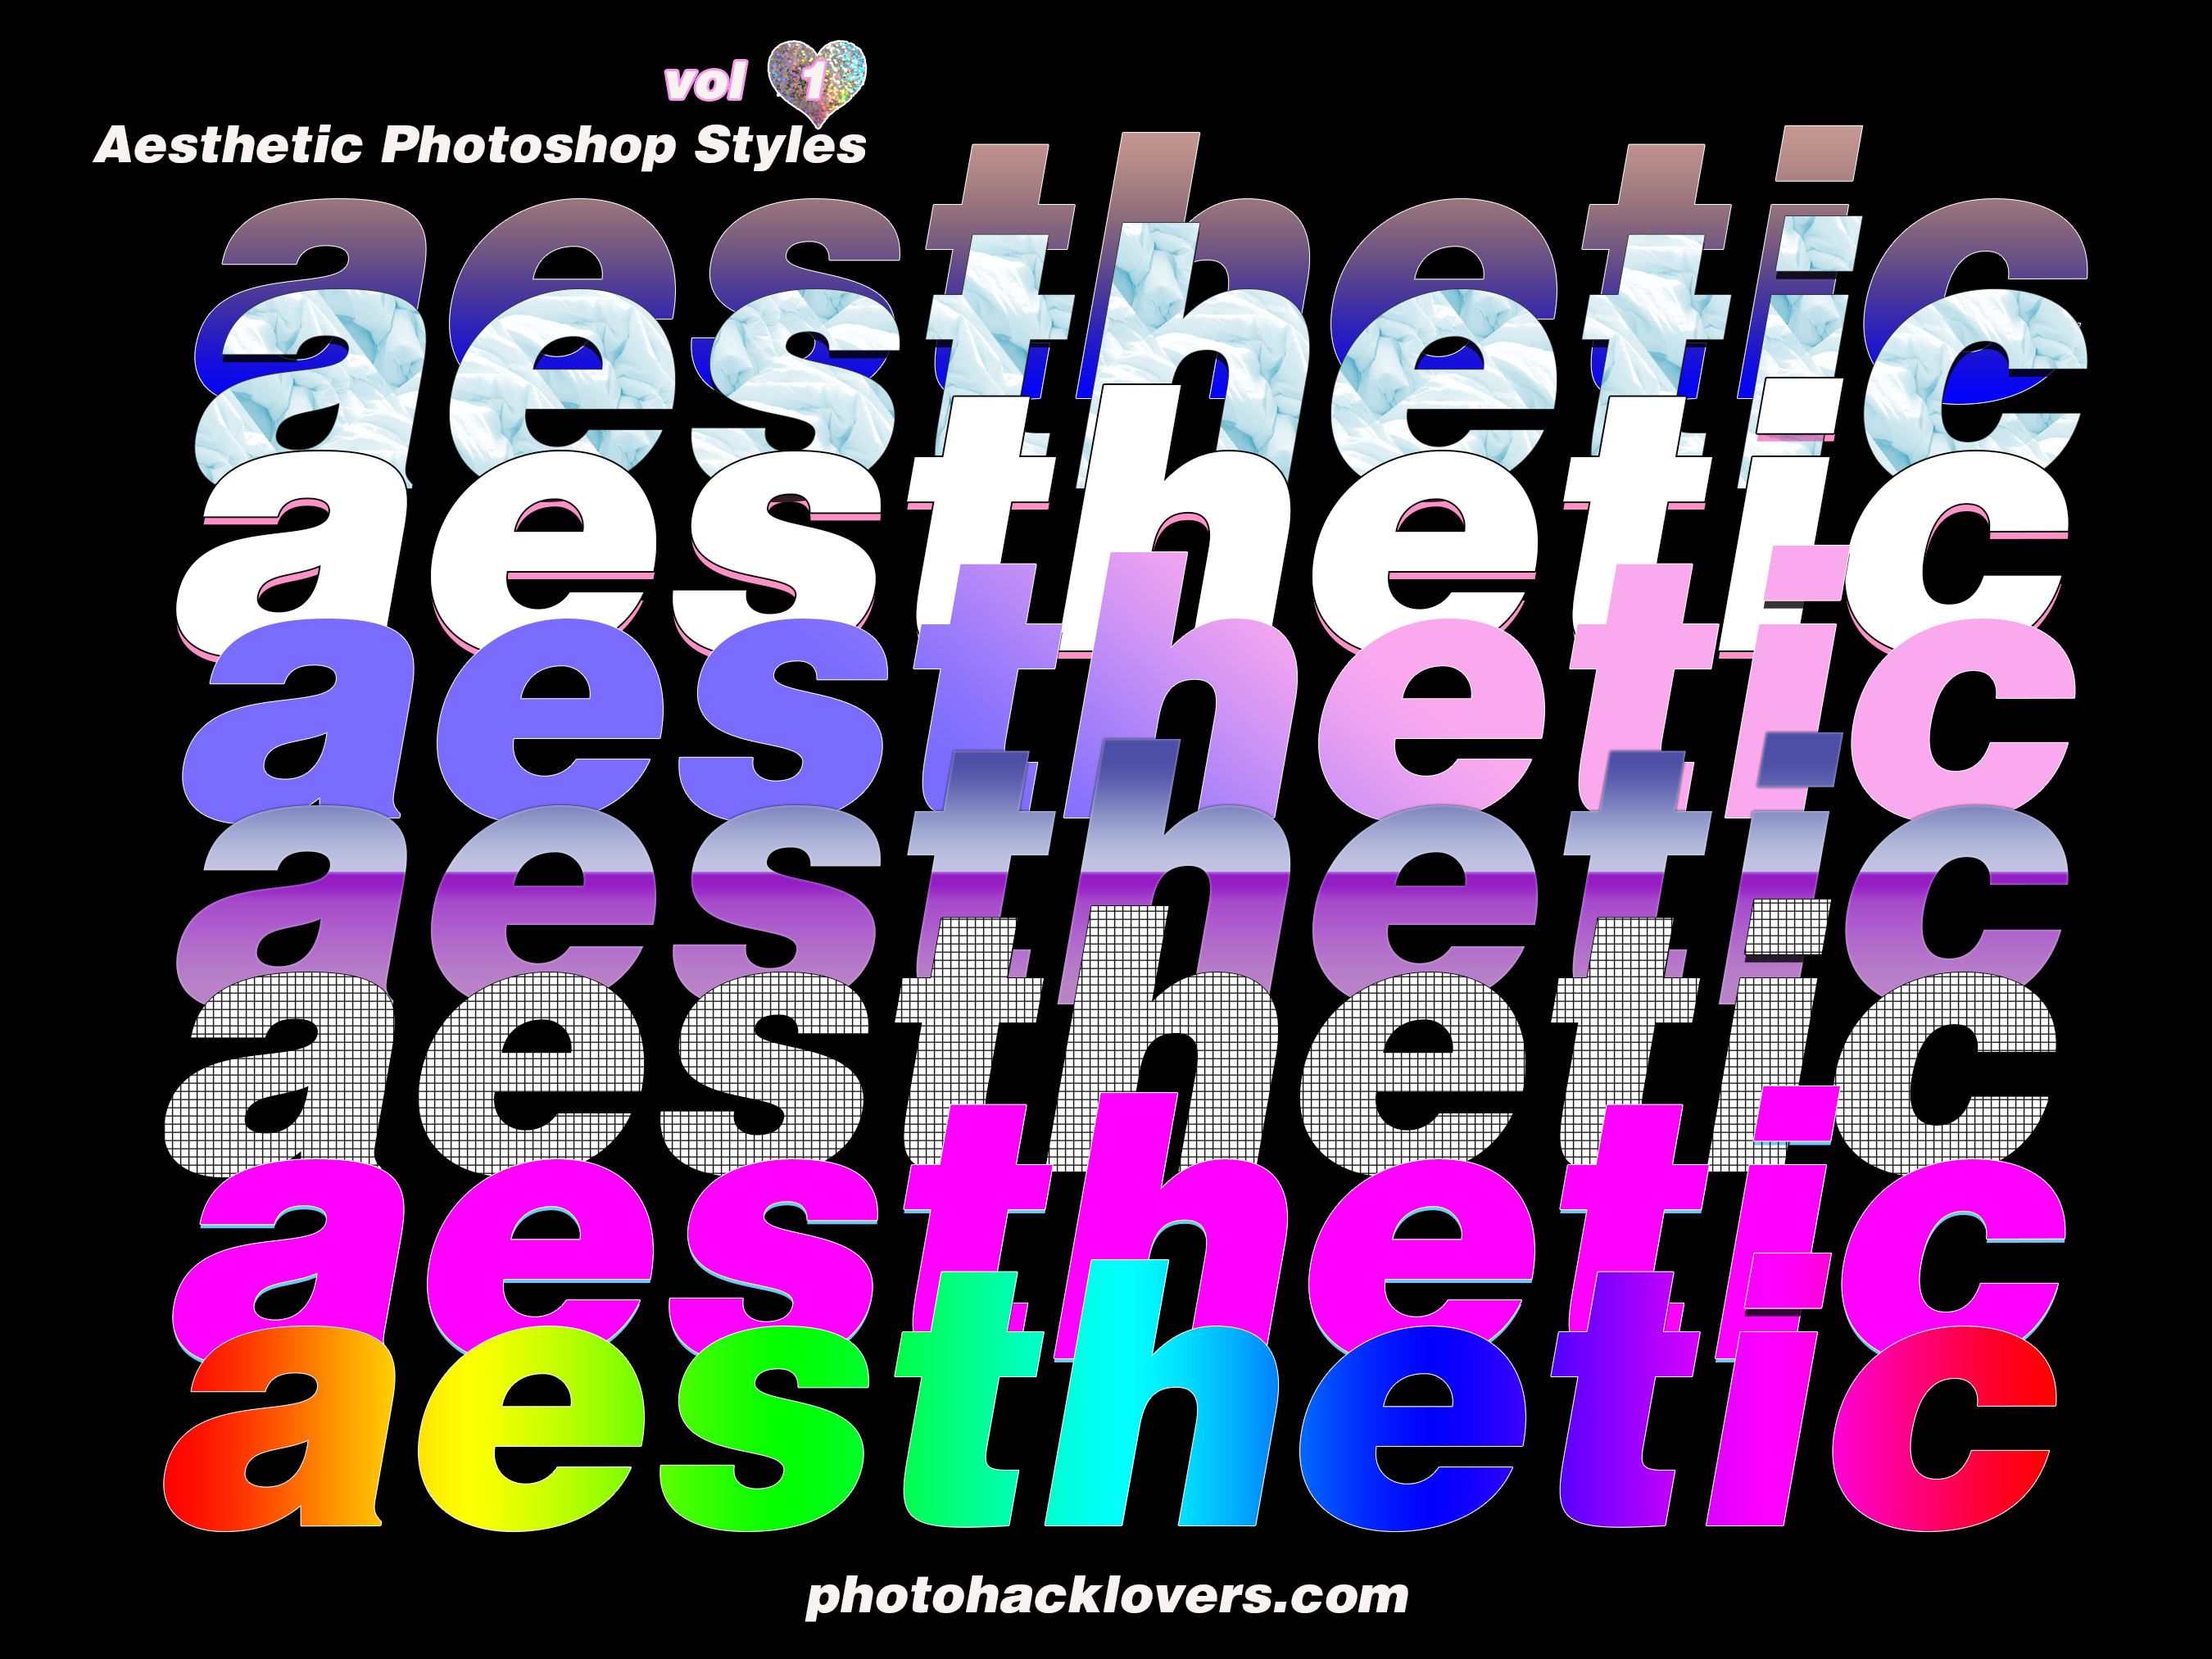 Aesthetic Photoshop Styles Vol 01 By photohacklovers | TheHungryJPEG